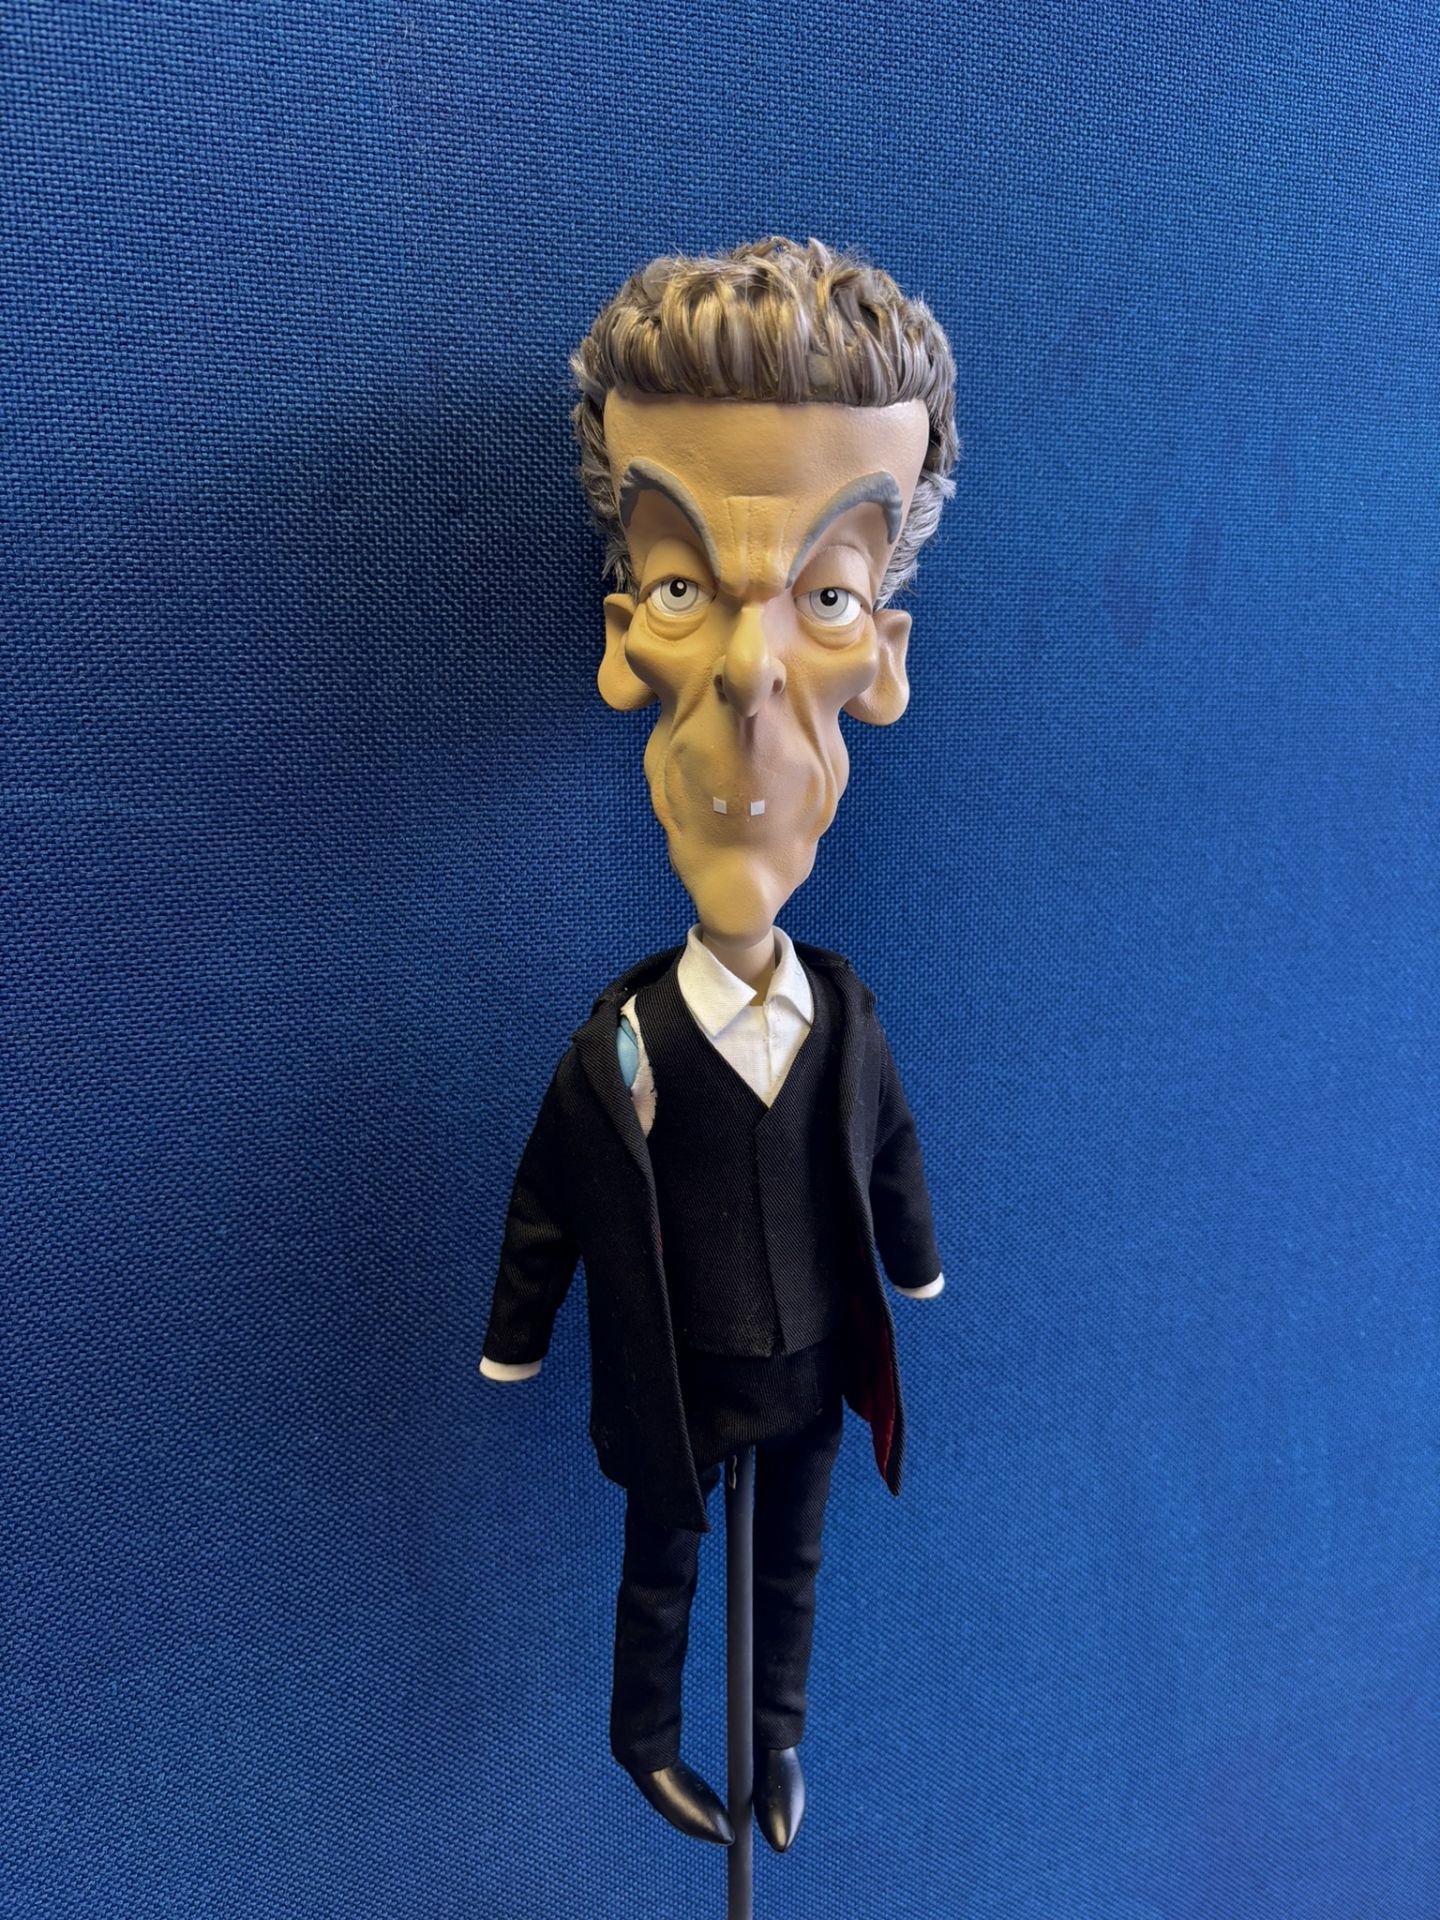 Newzoid puppet - Peter Capaldi - Image 3 of 5